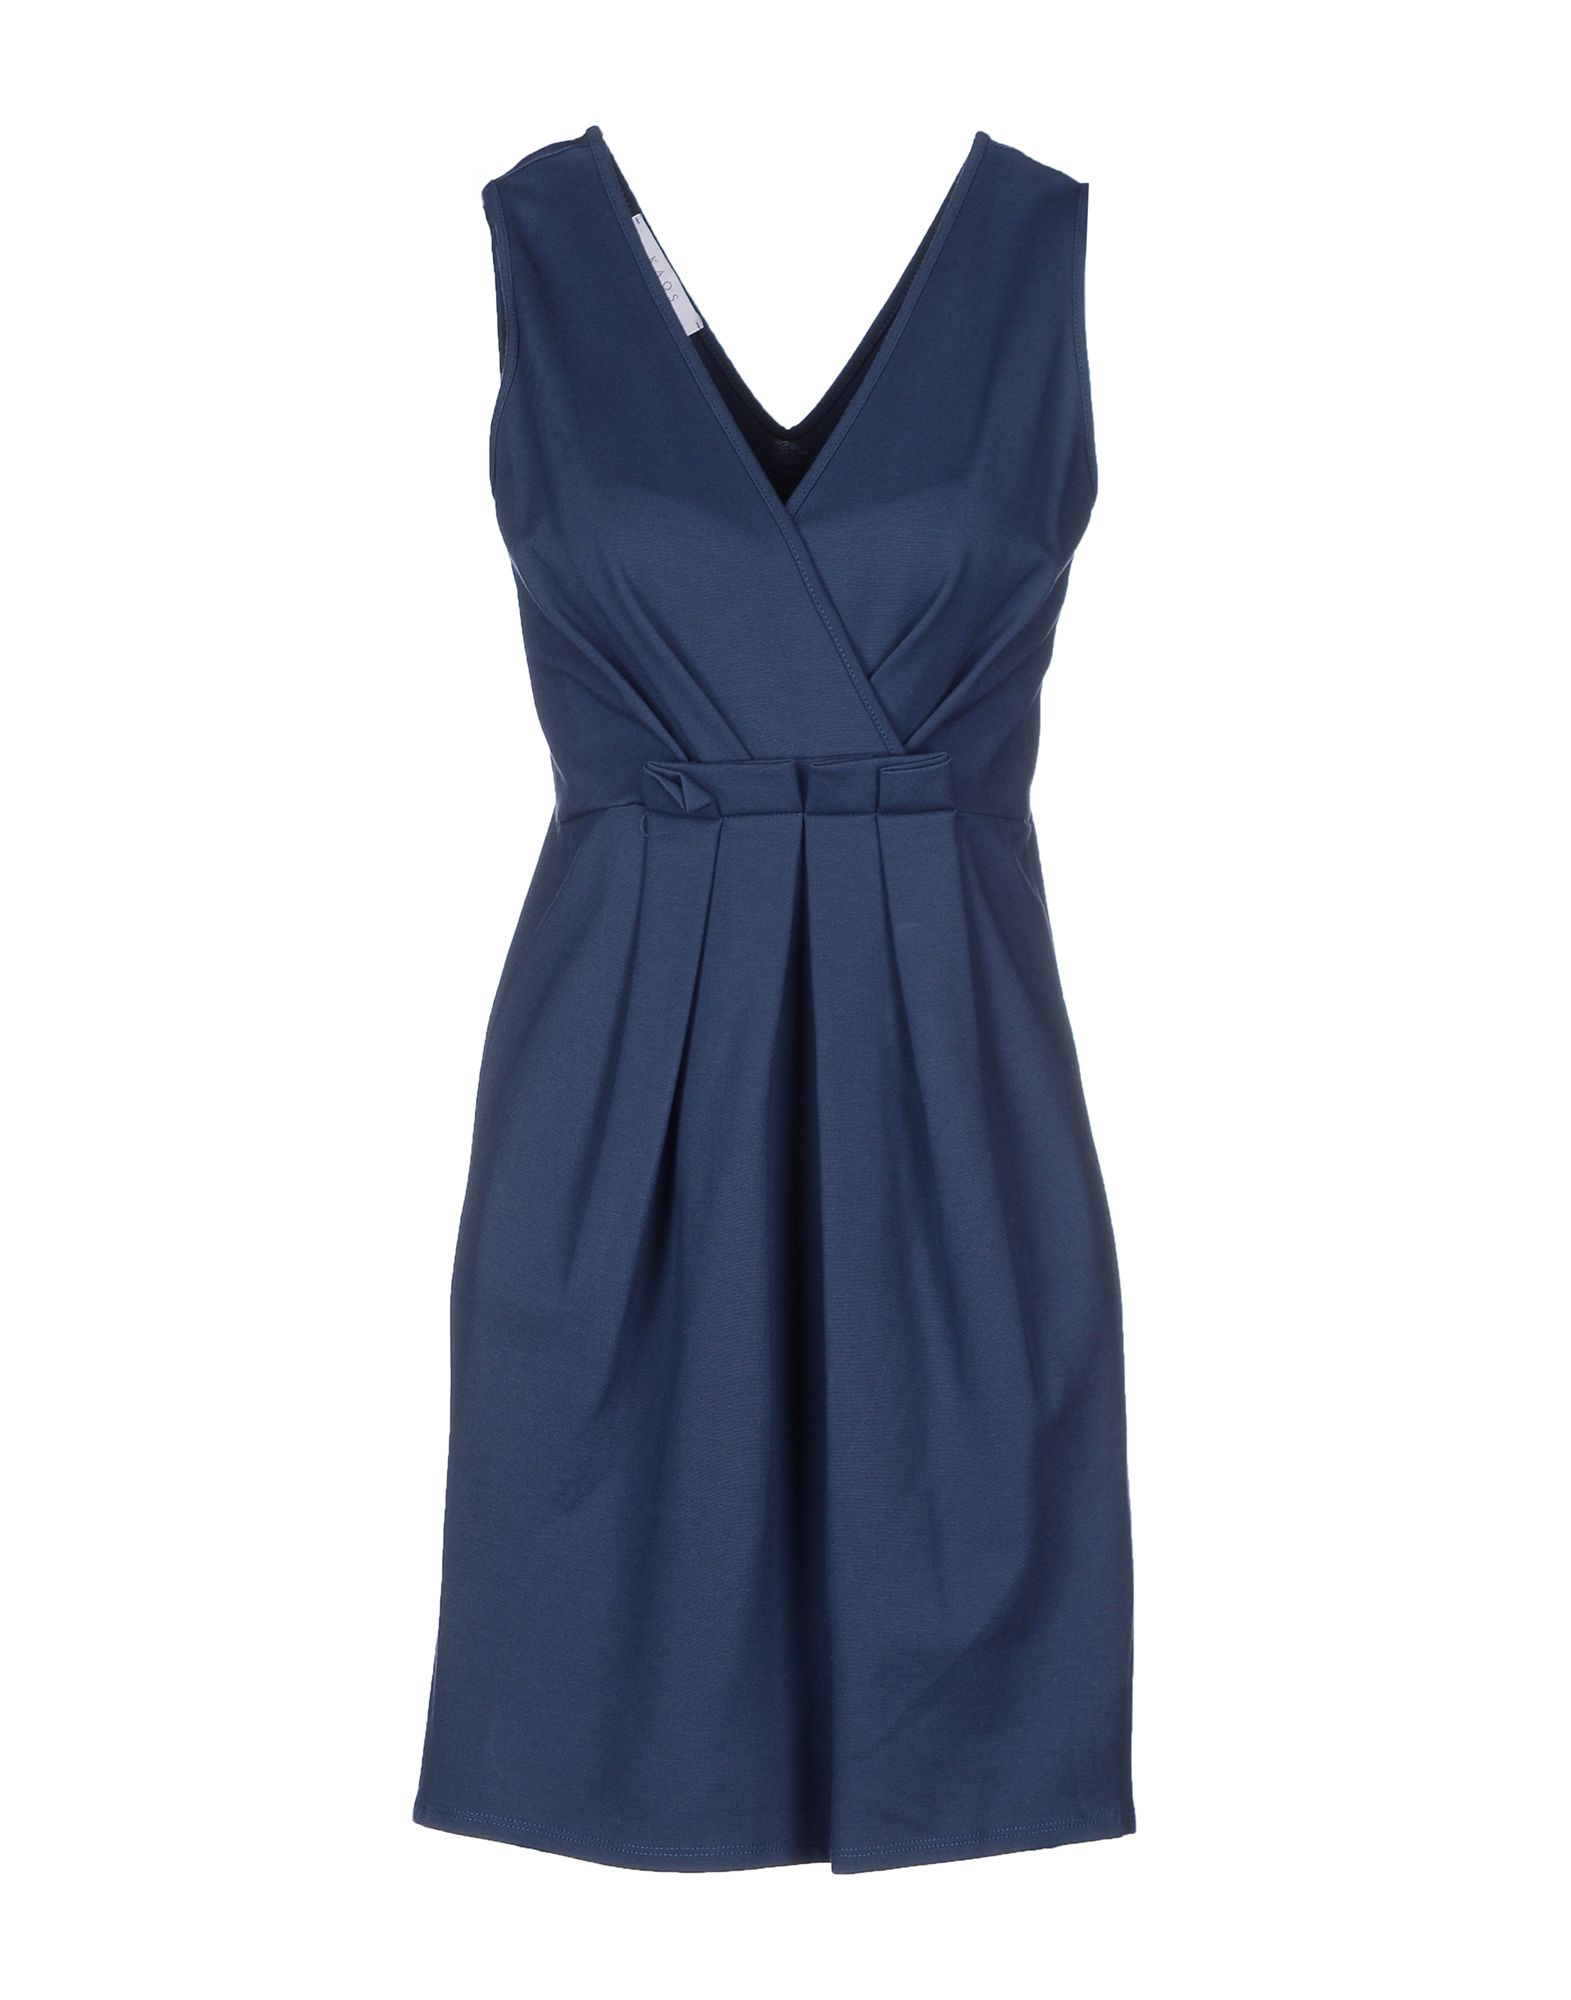 Kaos Short Dress in Blue (Slate blue) - Save 61% | Lyst